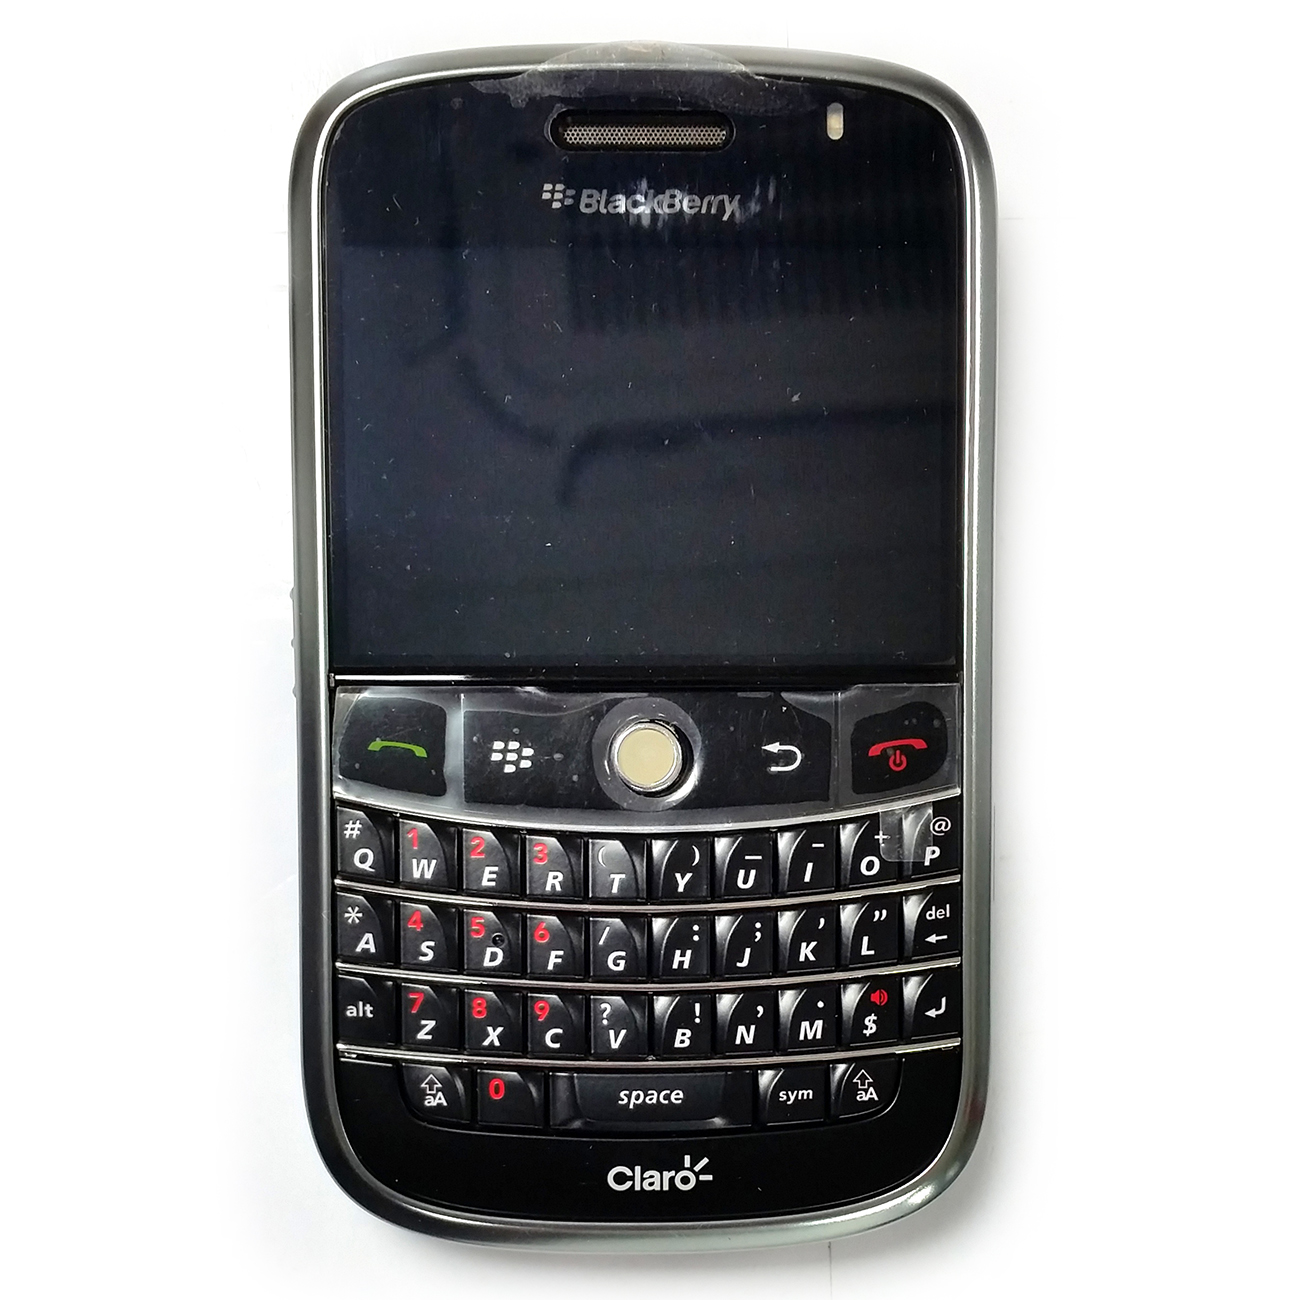 blackberry pearl 8100 specs